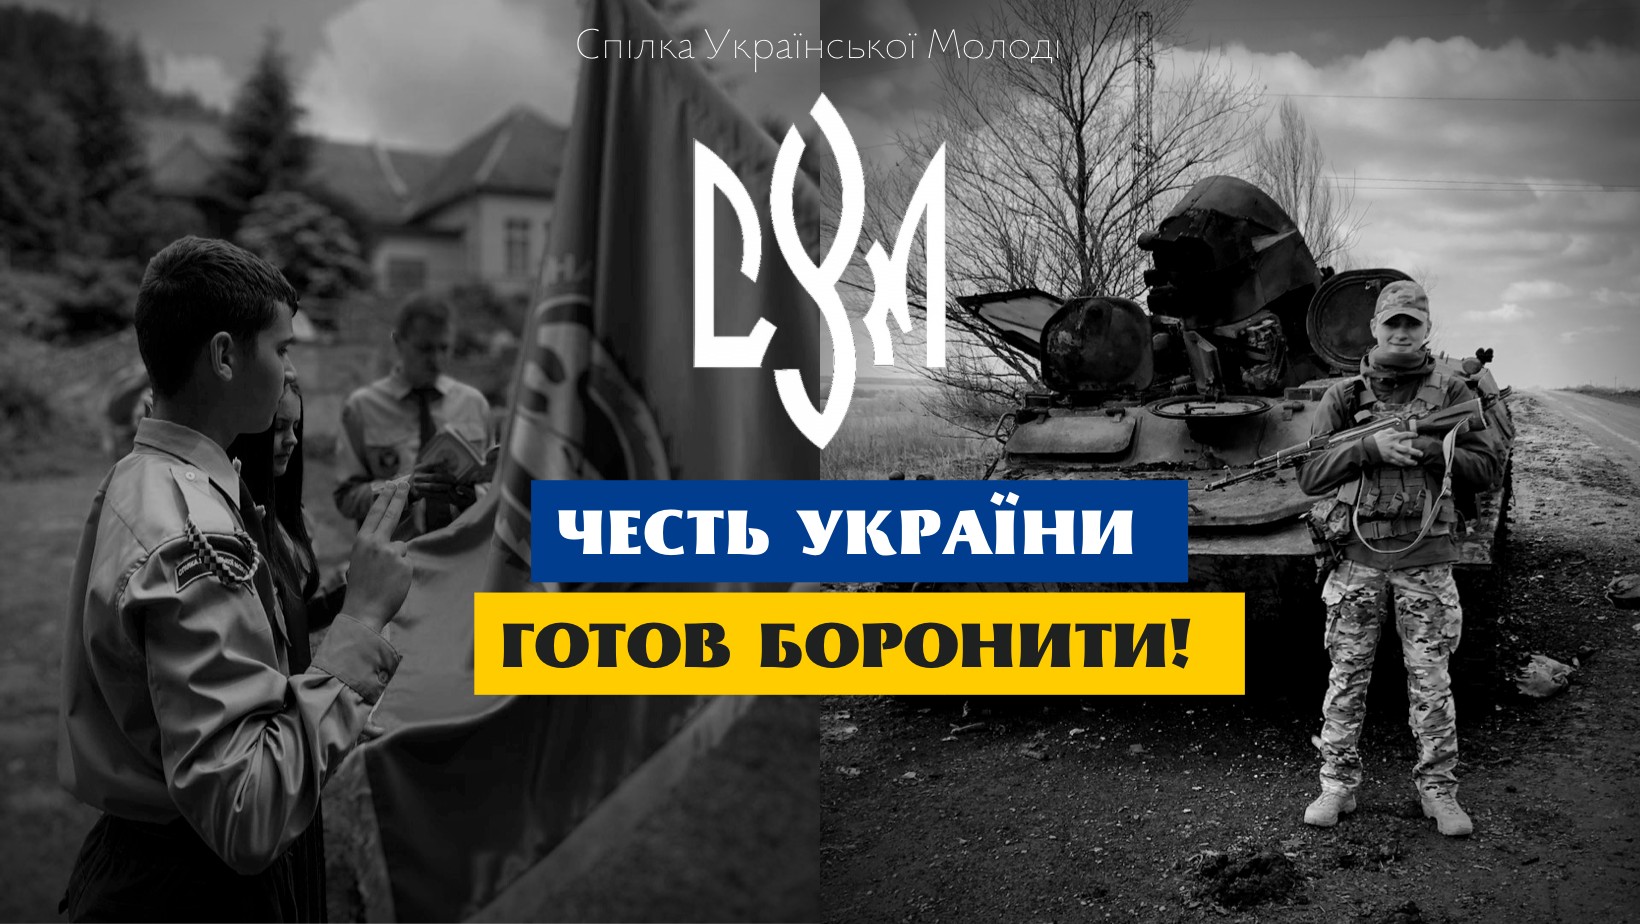 Ukrainian Youth Association – World Executive